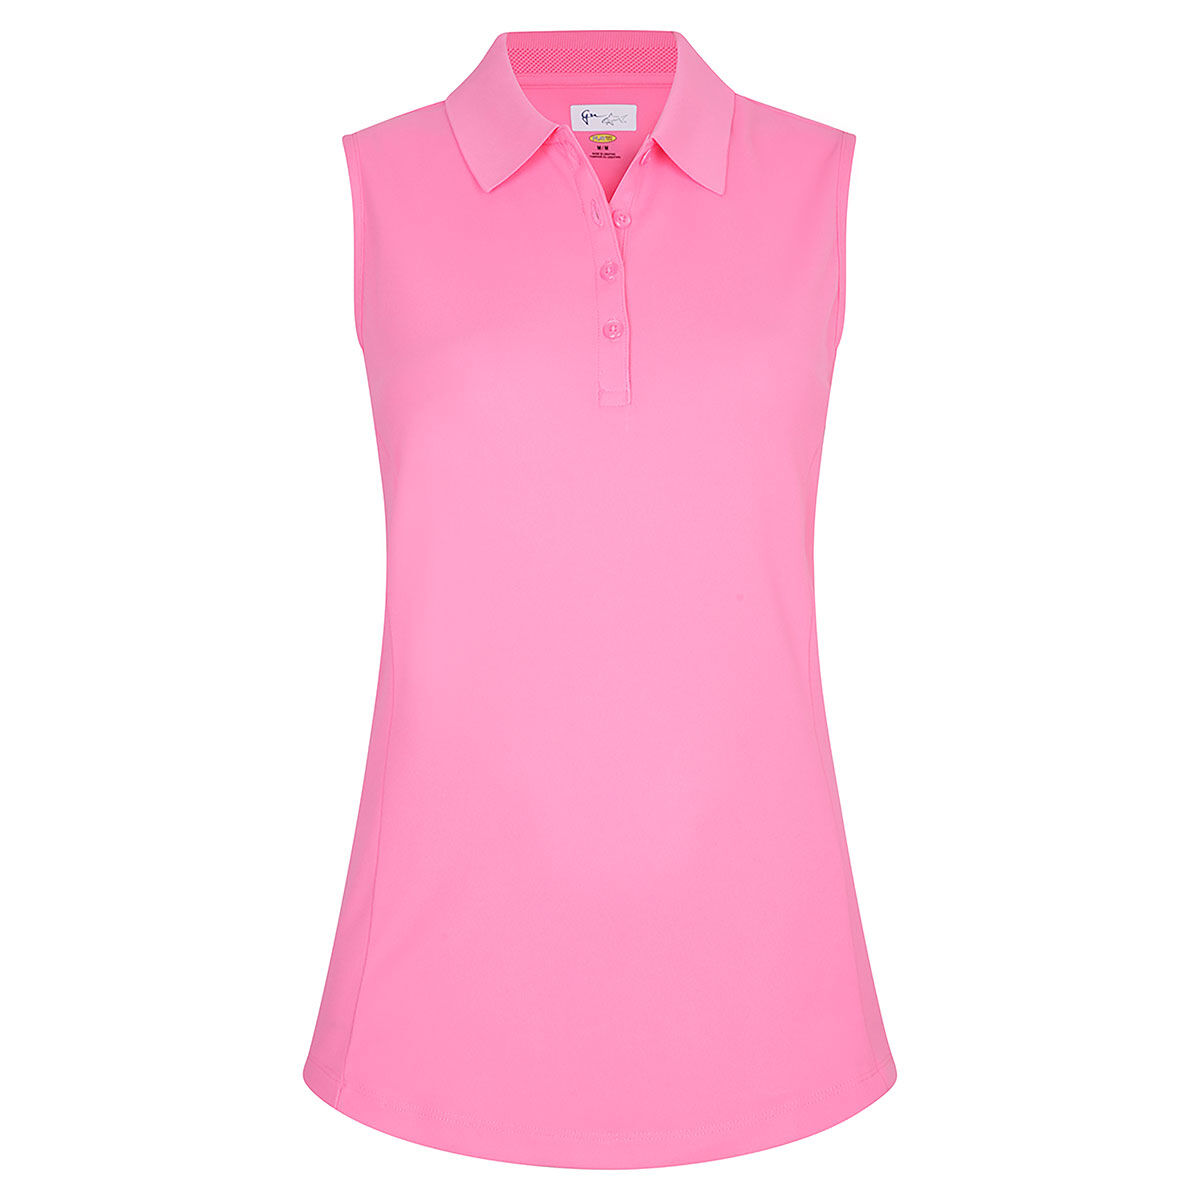 Polo Greg Norman Sleeveless pour femmes, femme, Small, Blush pink | Online Golf